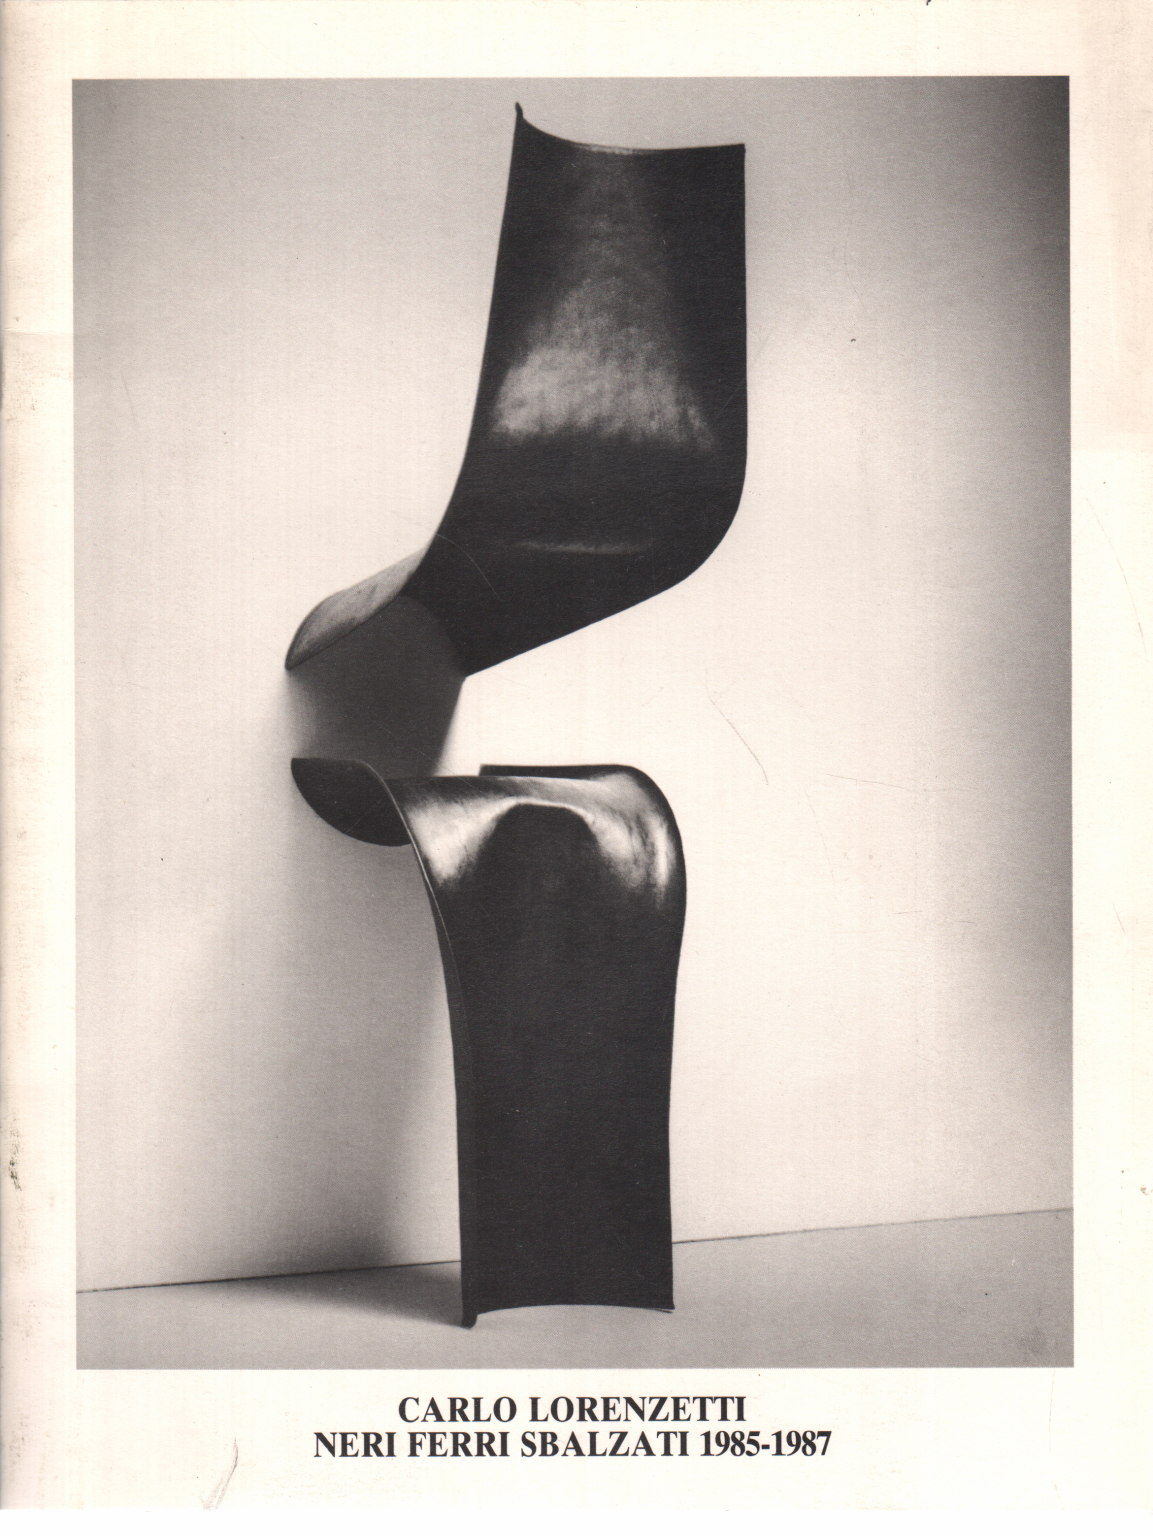 Carlo Lorenzetti: hierros negros repujados 1985-1987, Marco Meneguzzo